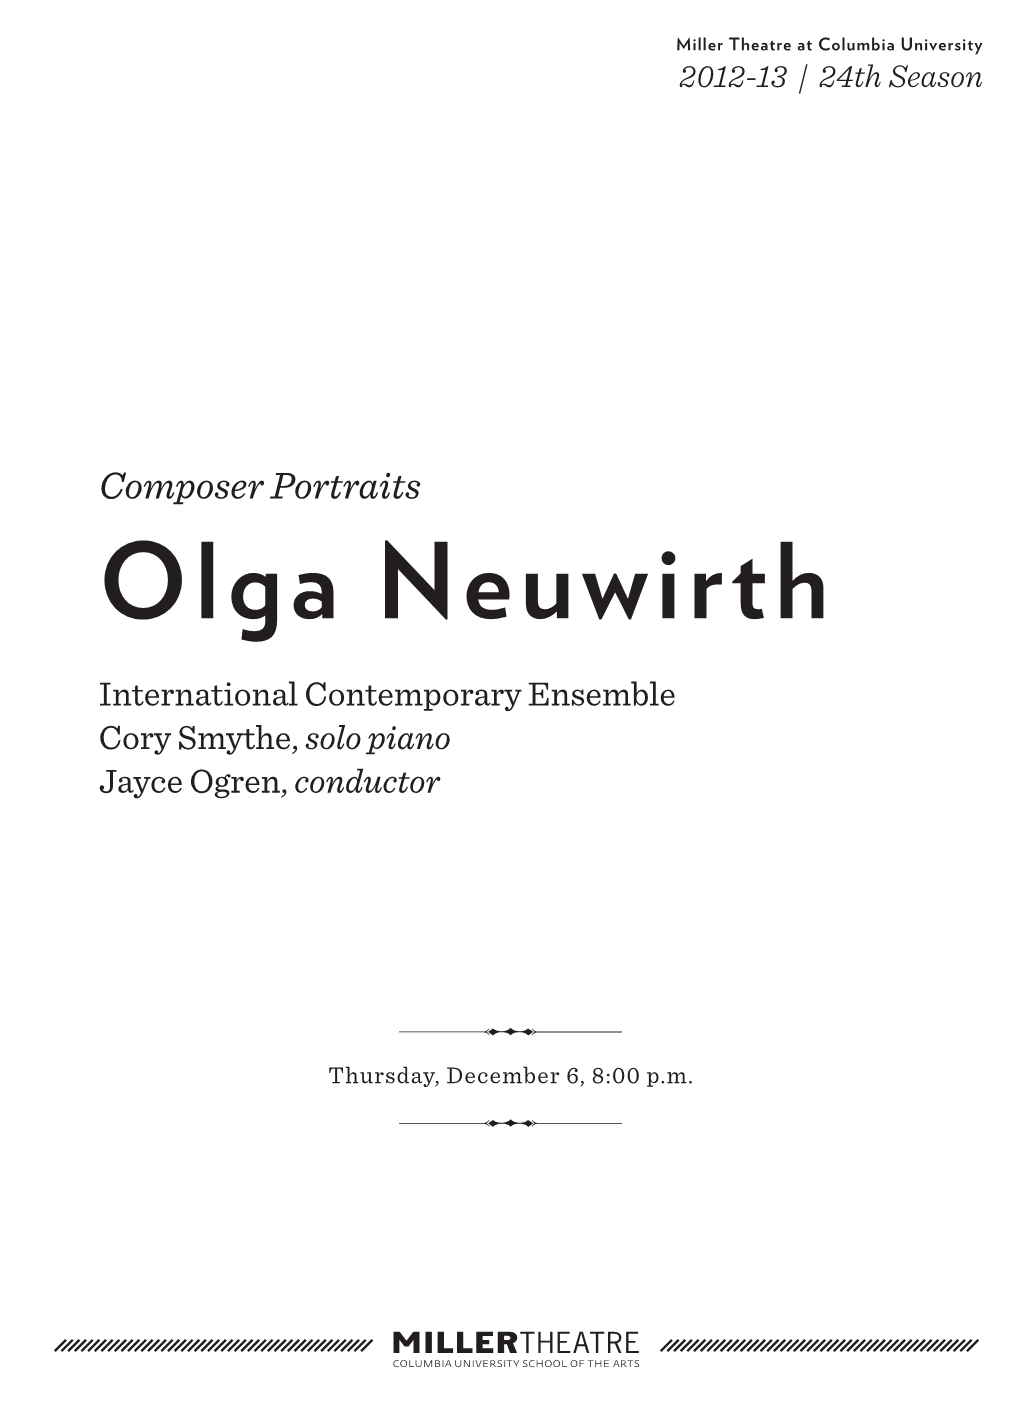 Olga Neuwirth International Contemporary Ensemble Cory Smythe, Solo Piano Jayce Ogren, Conductor